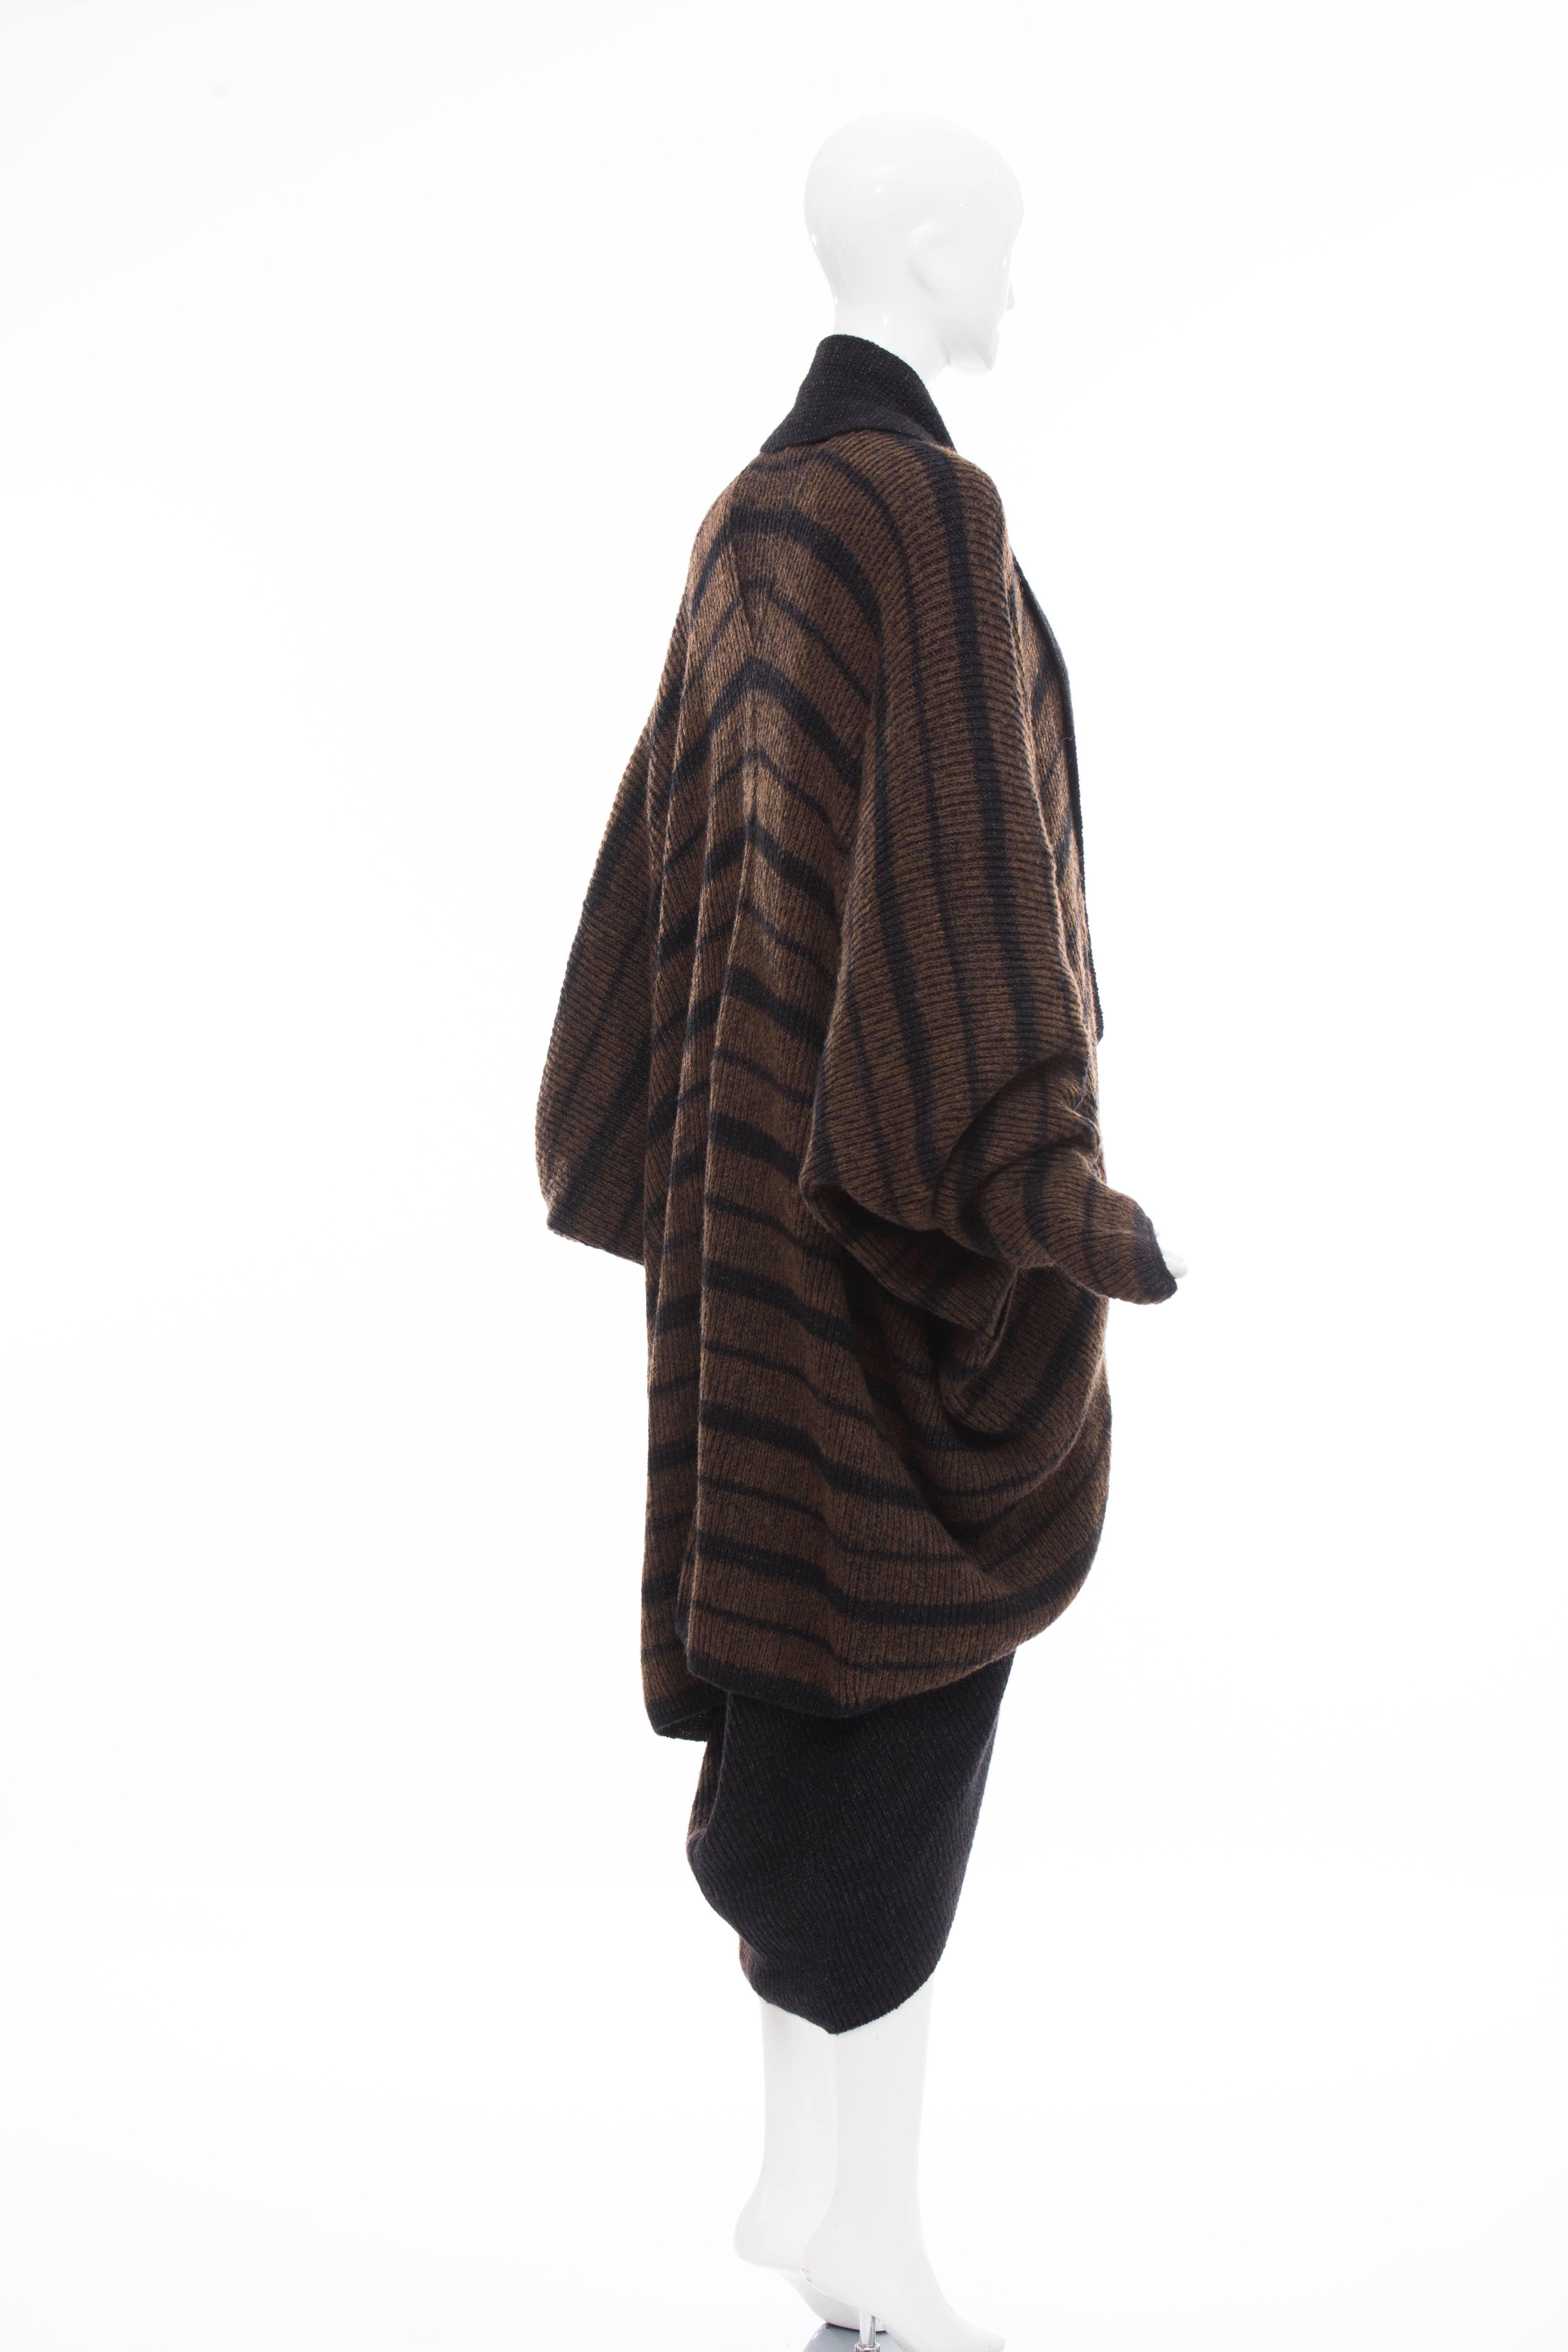 Black Issey Miyake Striped Wool Sweater Dress Cocoon Cardigan Ensemble, Circa 1970s For Sale